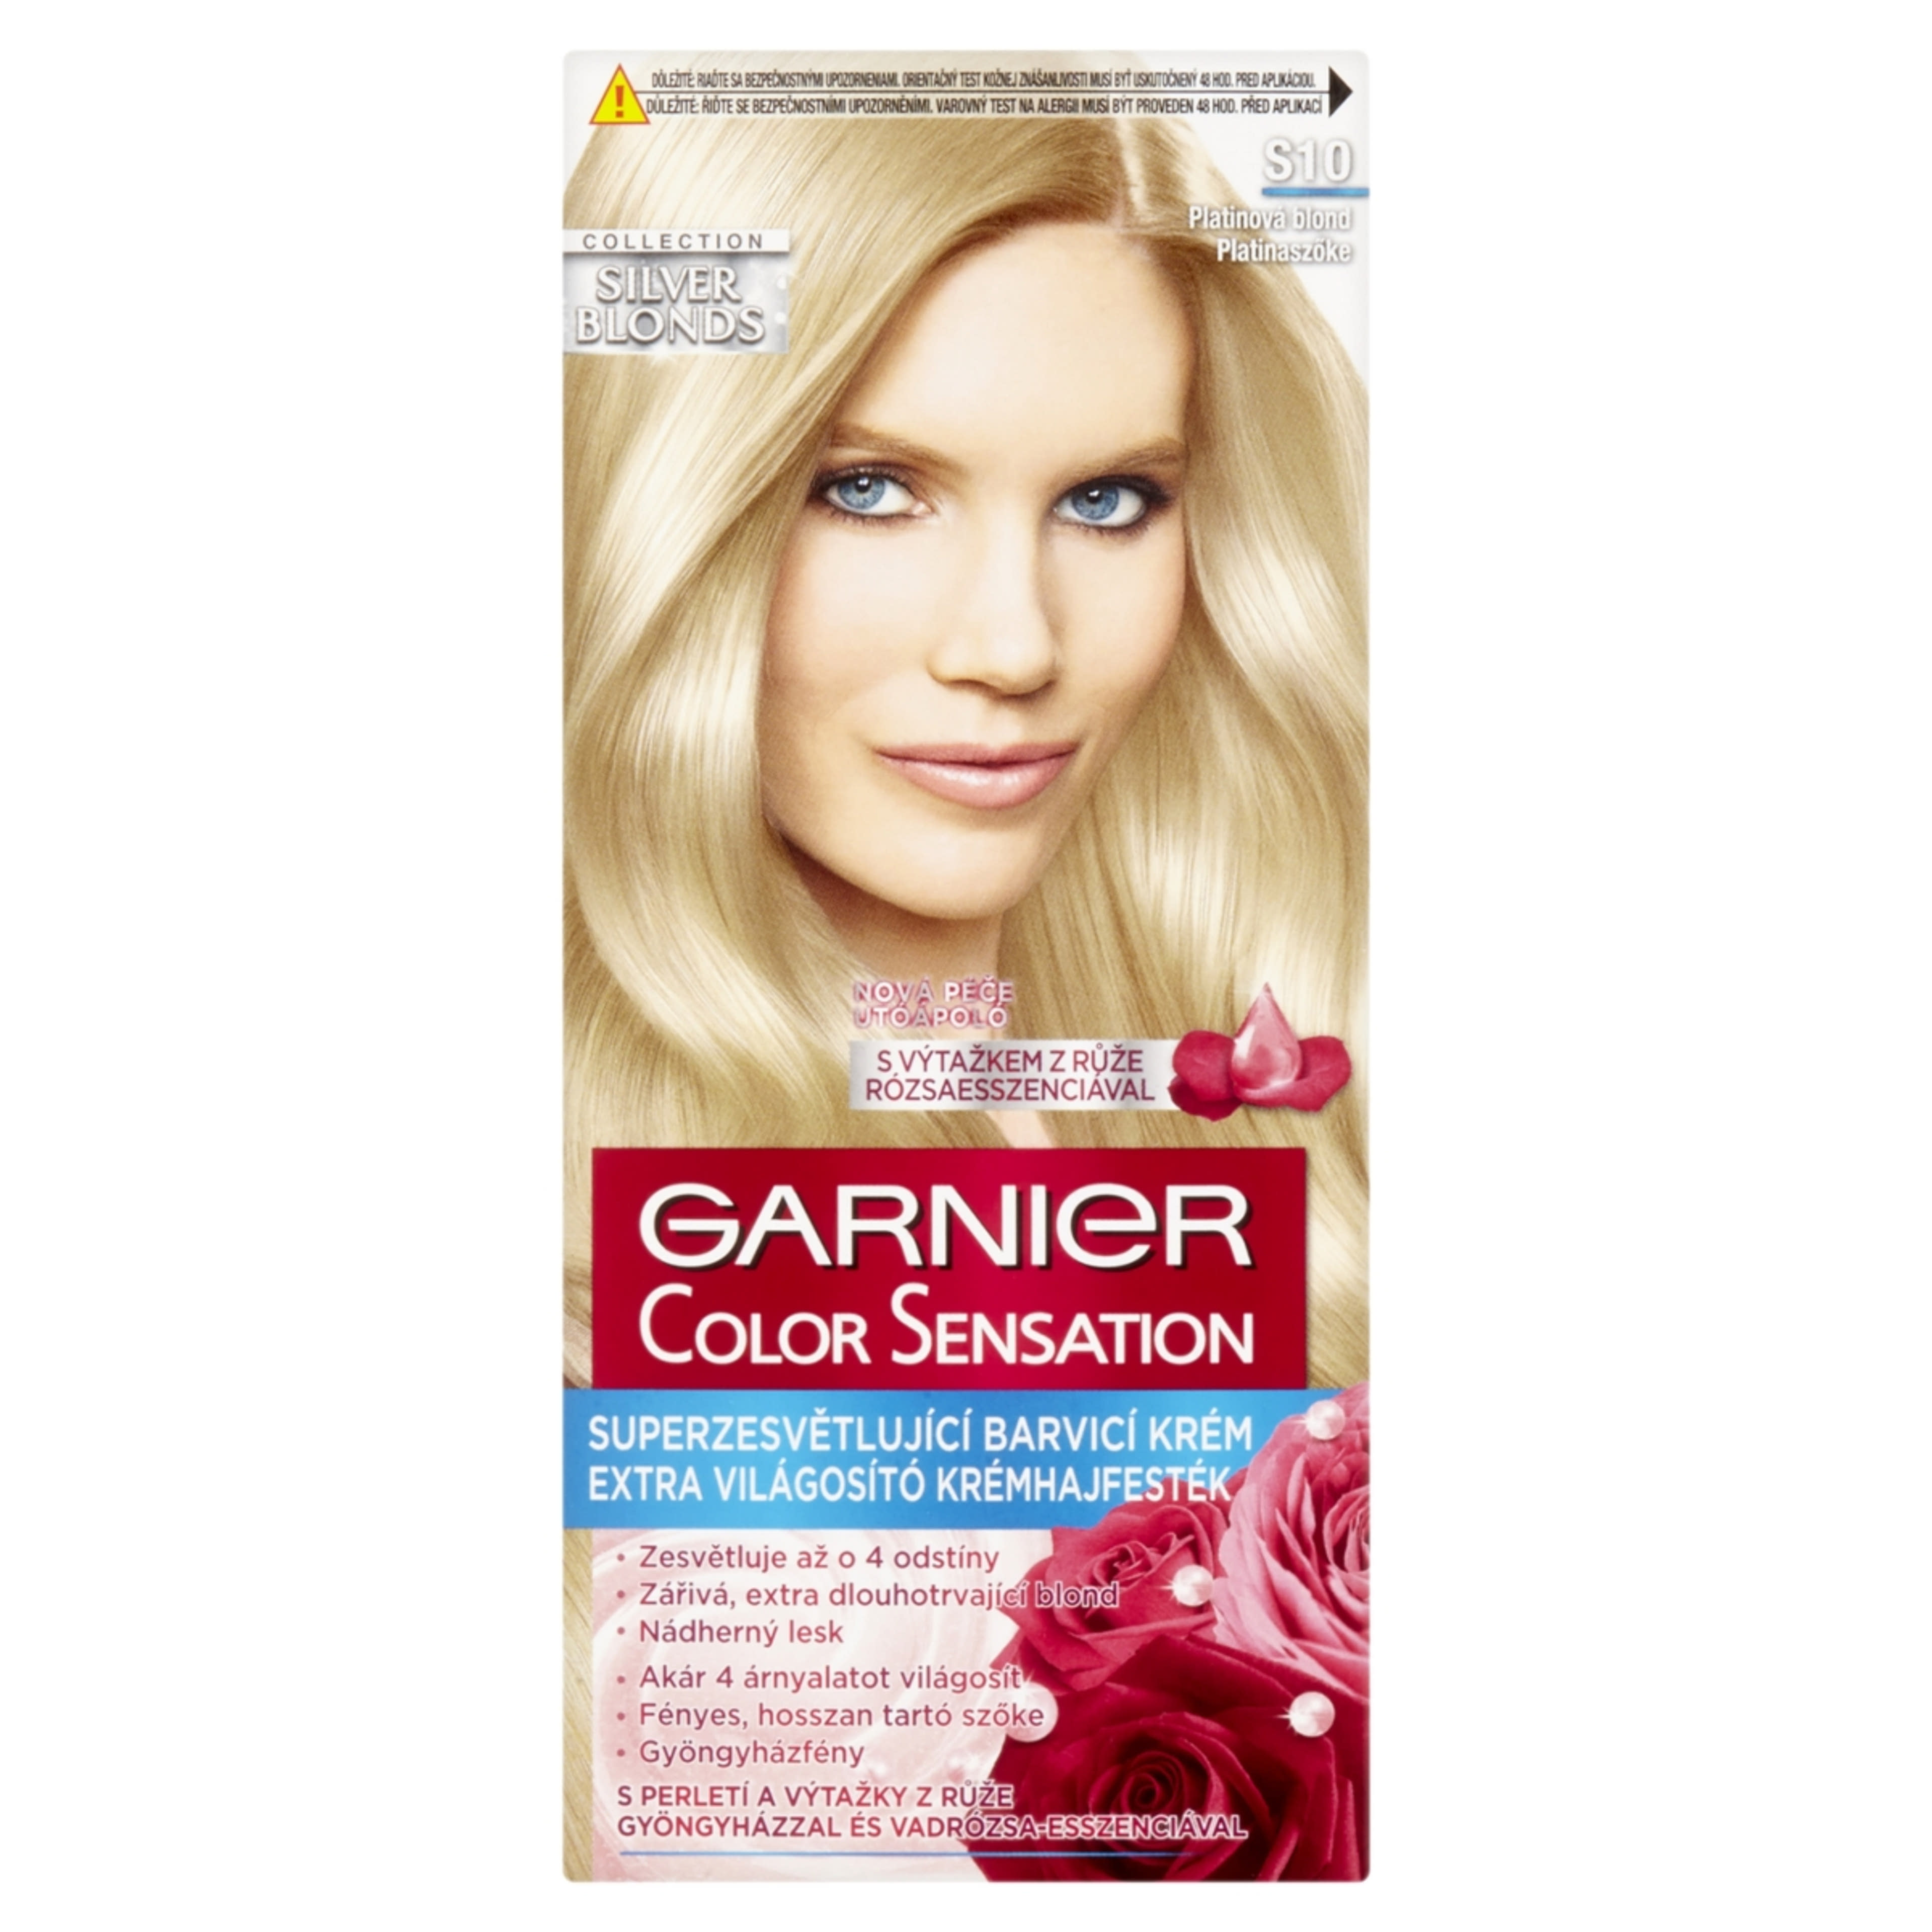 Garnier Color Sensation hajfesték S10 Platinaszőke - 1 db